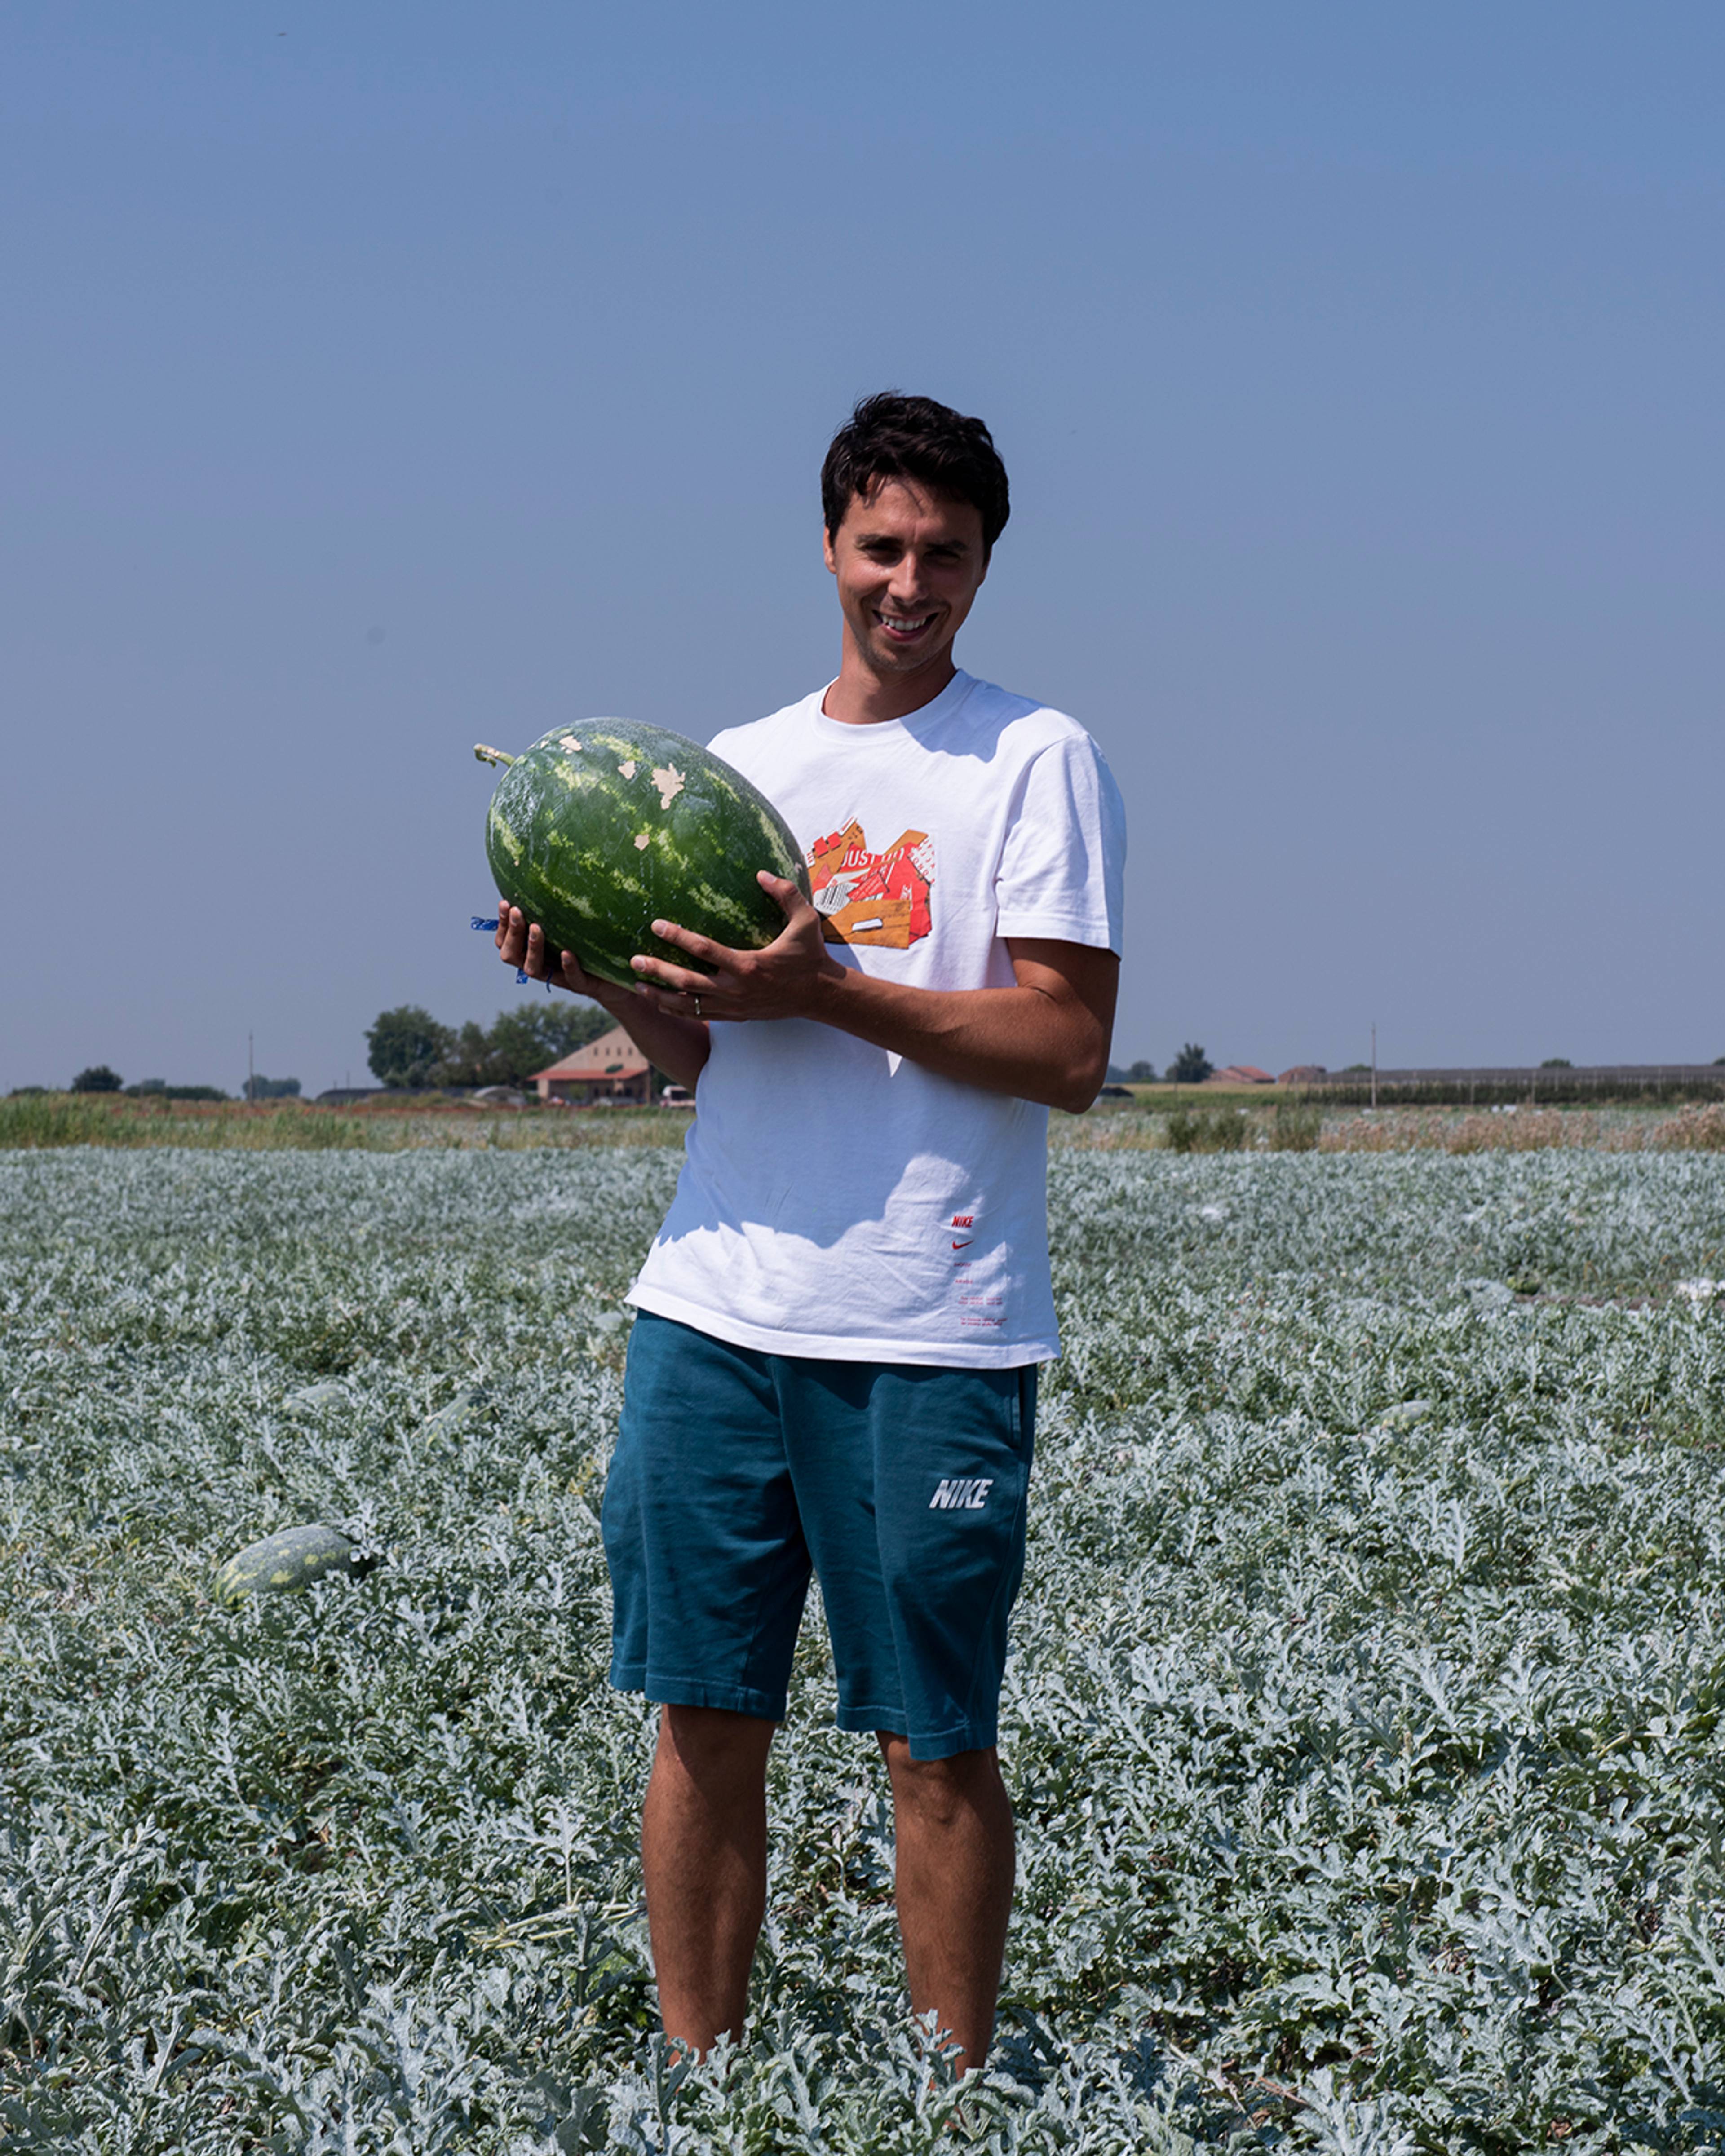 oscar holding a zerbinati watermelon in the field